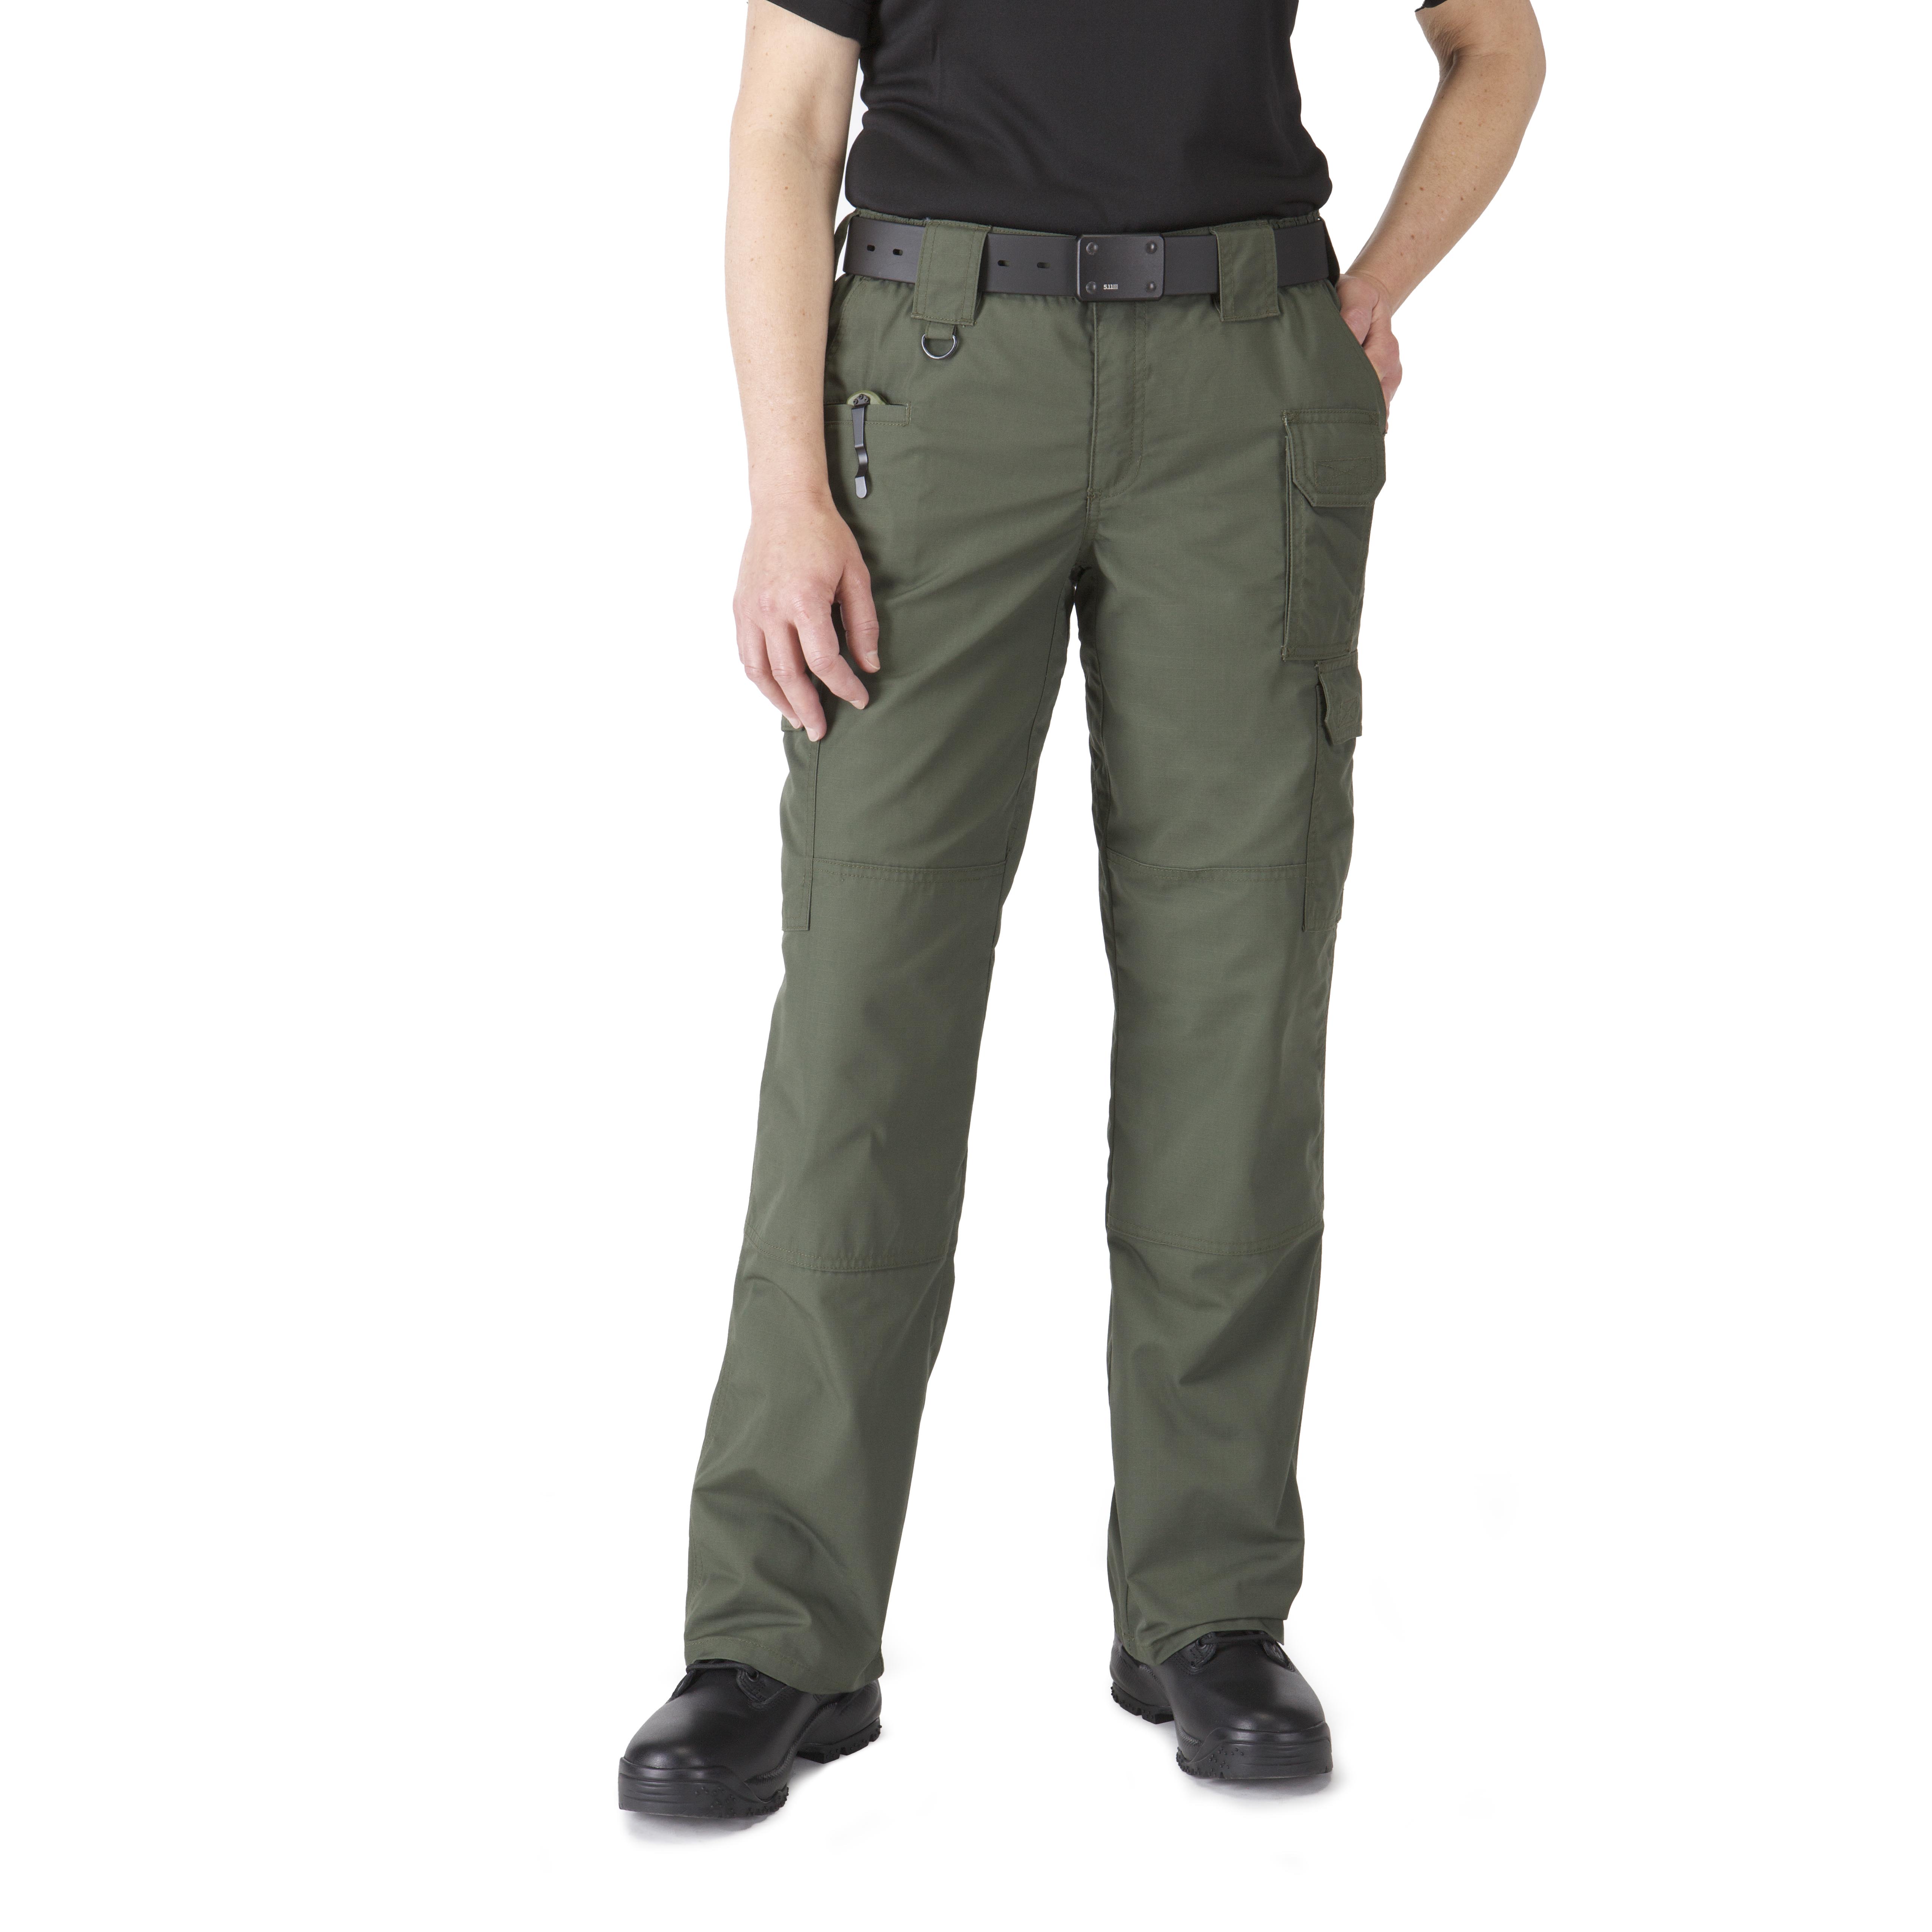 5.11 Tactical TacLite Pro Women's Ripstop Pants